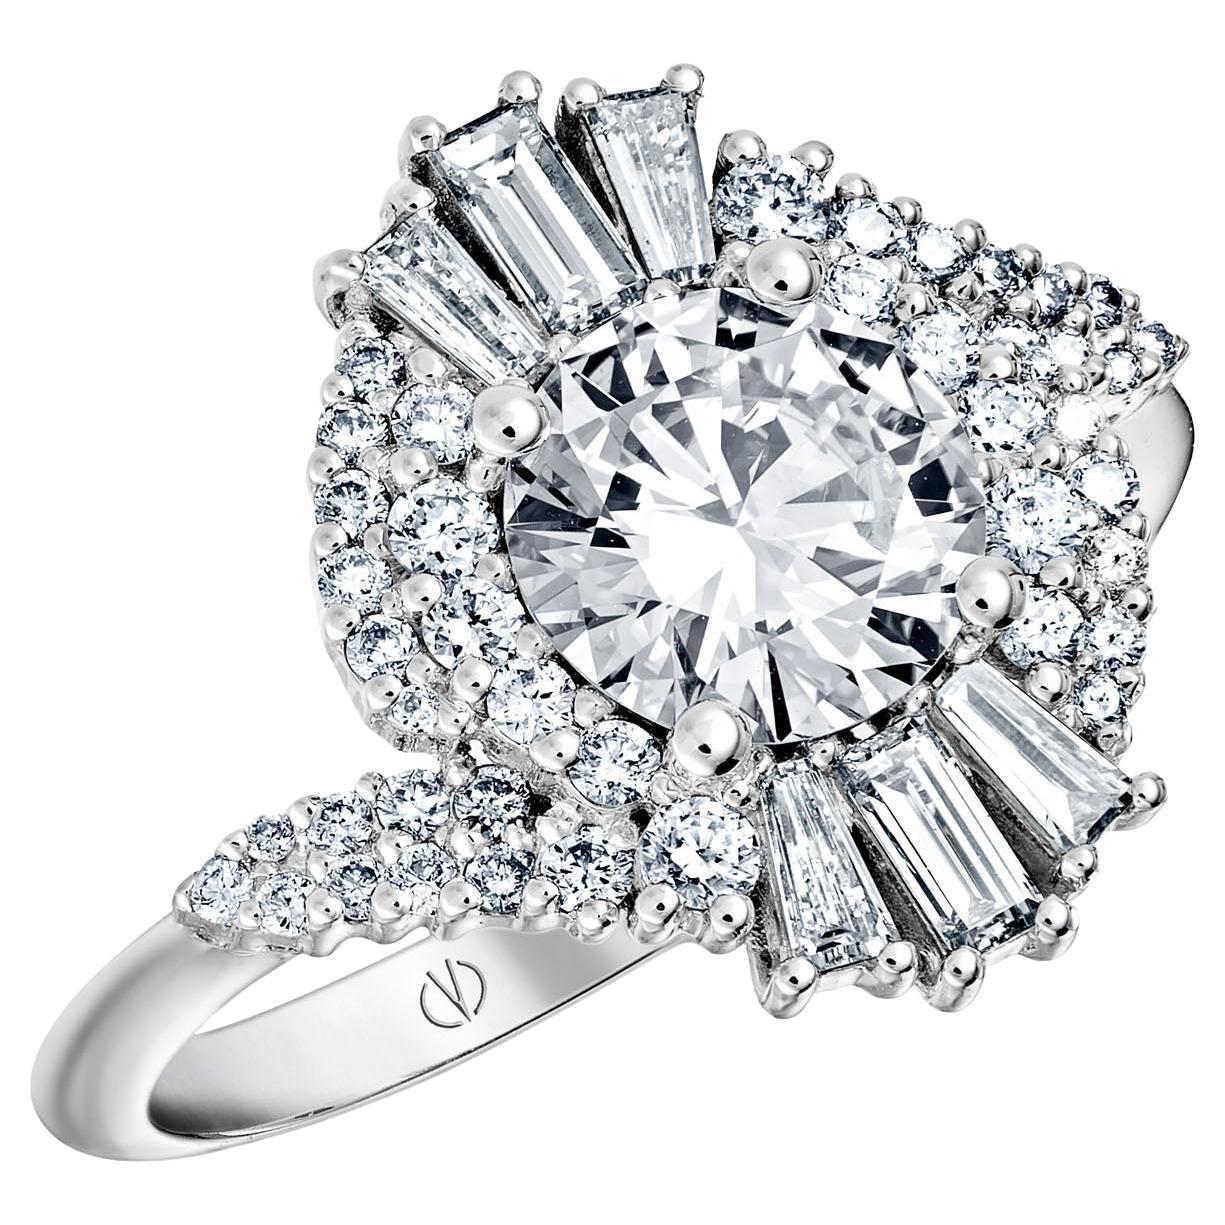 Art Deco Style 18k White Gold 0.90 Ct Diamond Ring Set With Taper Cut Diamonds